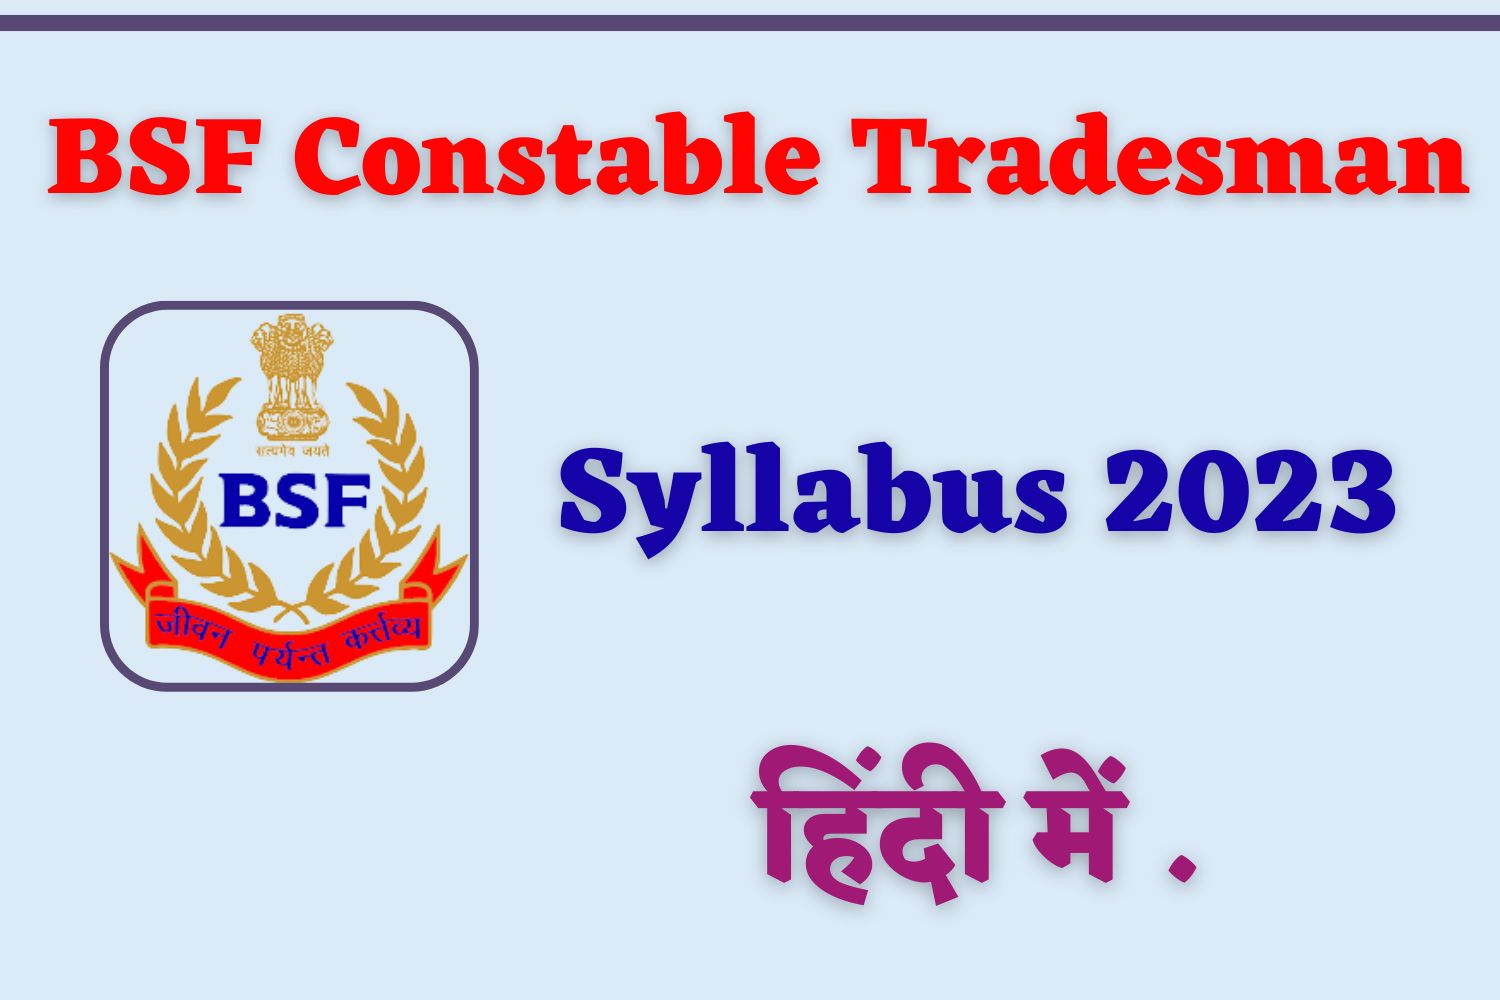 BSF Constable Tradesman Syllabus 2023 In Hindi